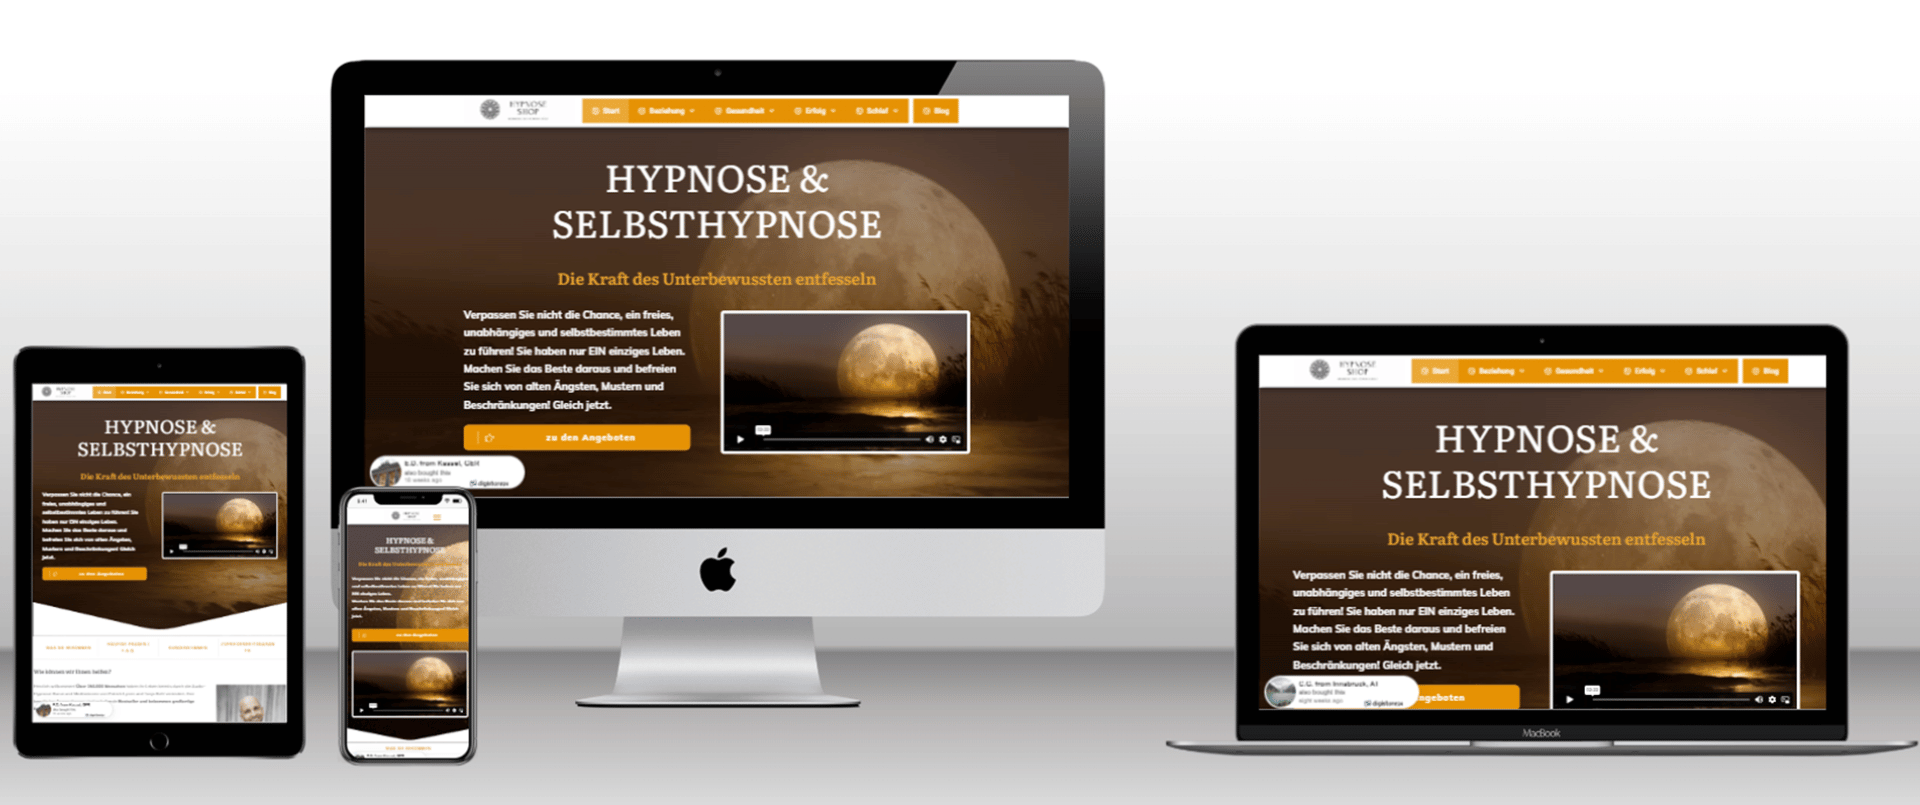 Hypnoseshop24